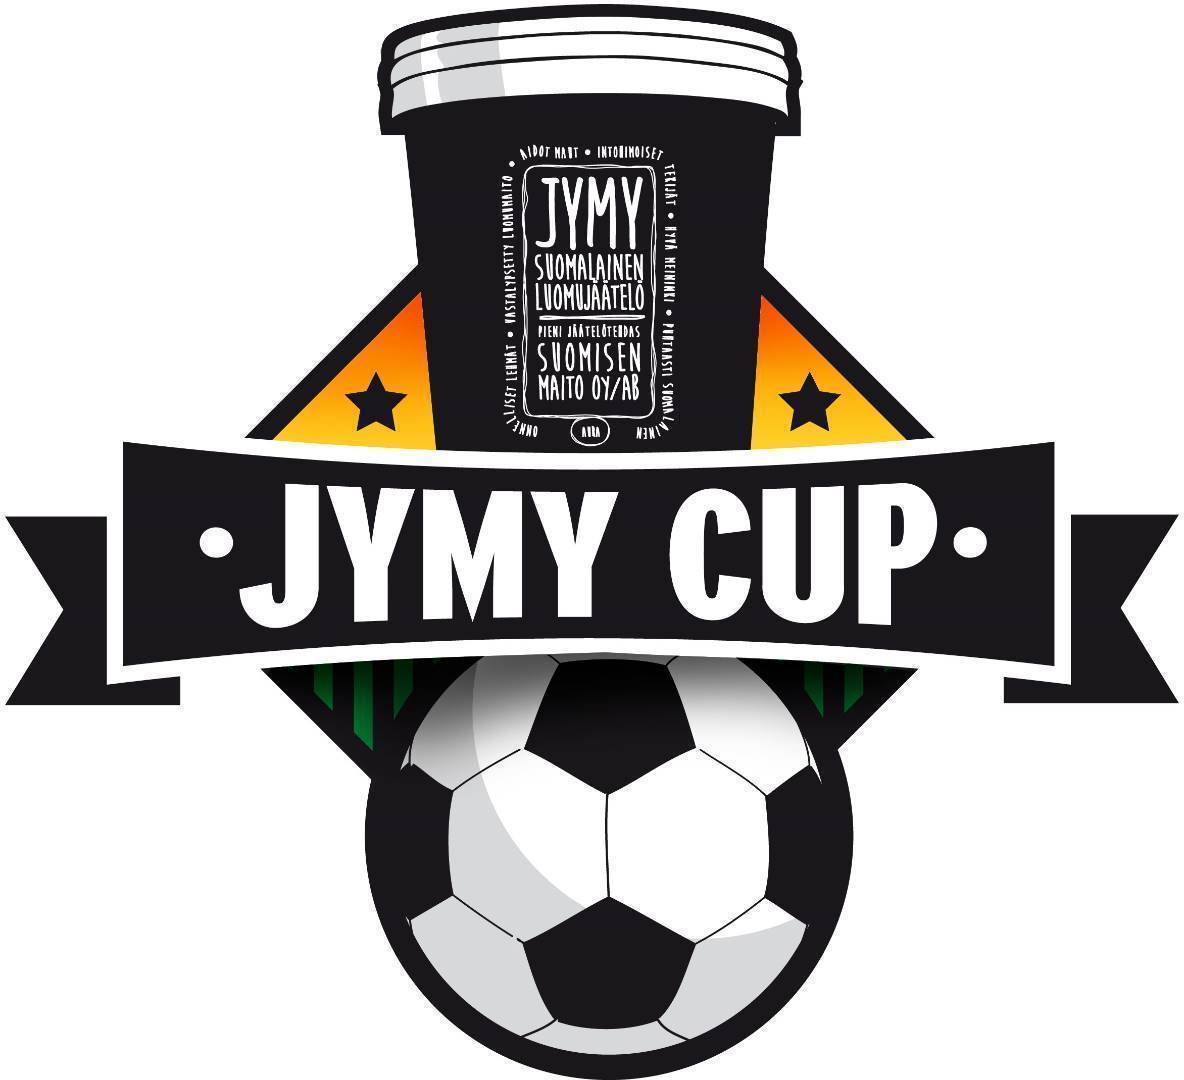 LTU-13 Jymy Cupissa